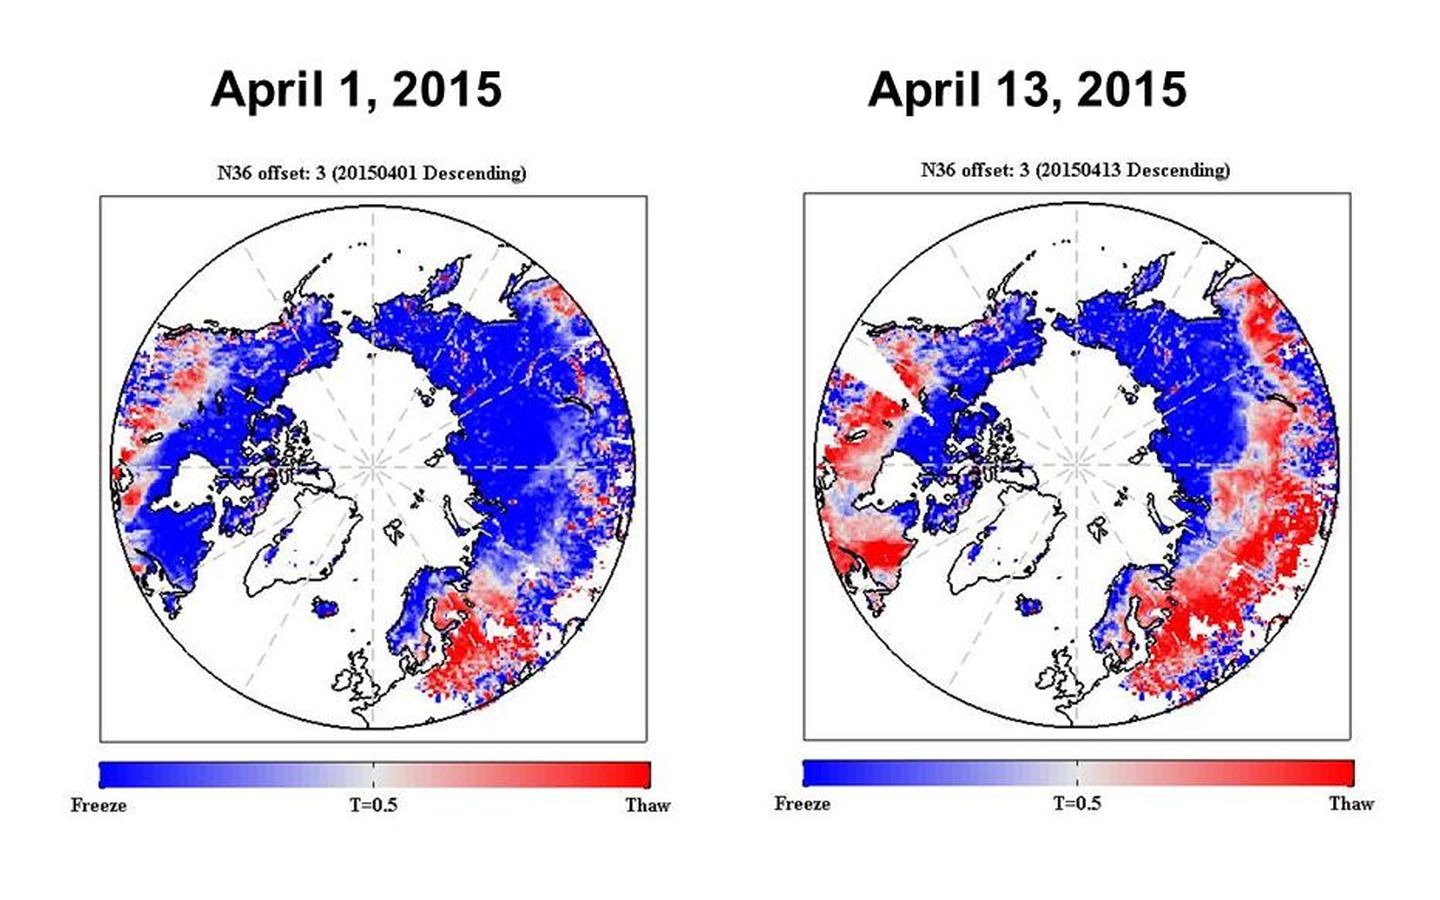 North pole data visualization shows seasonal freeze and thaw data of soils.